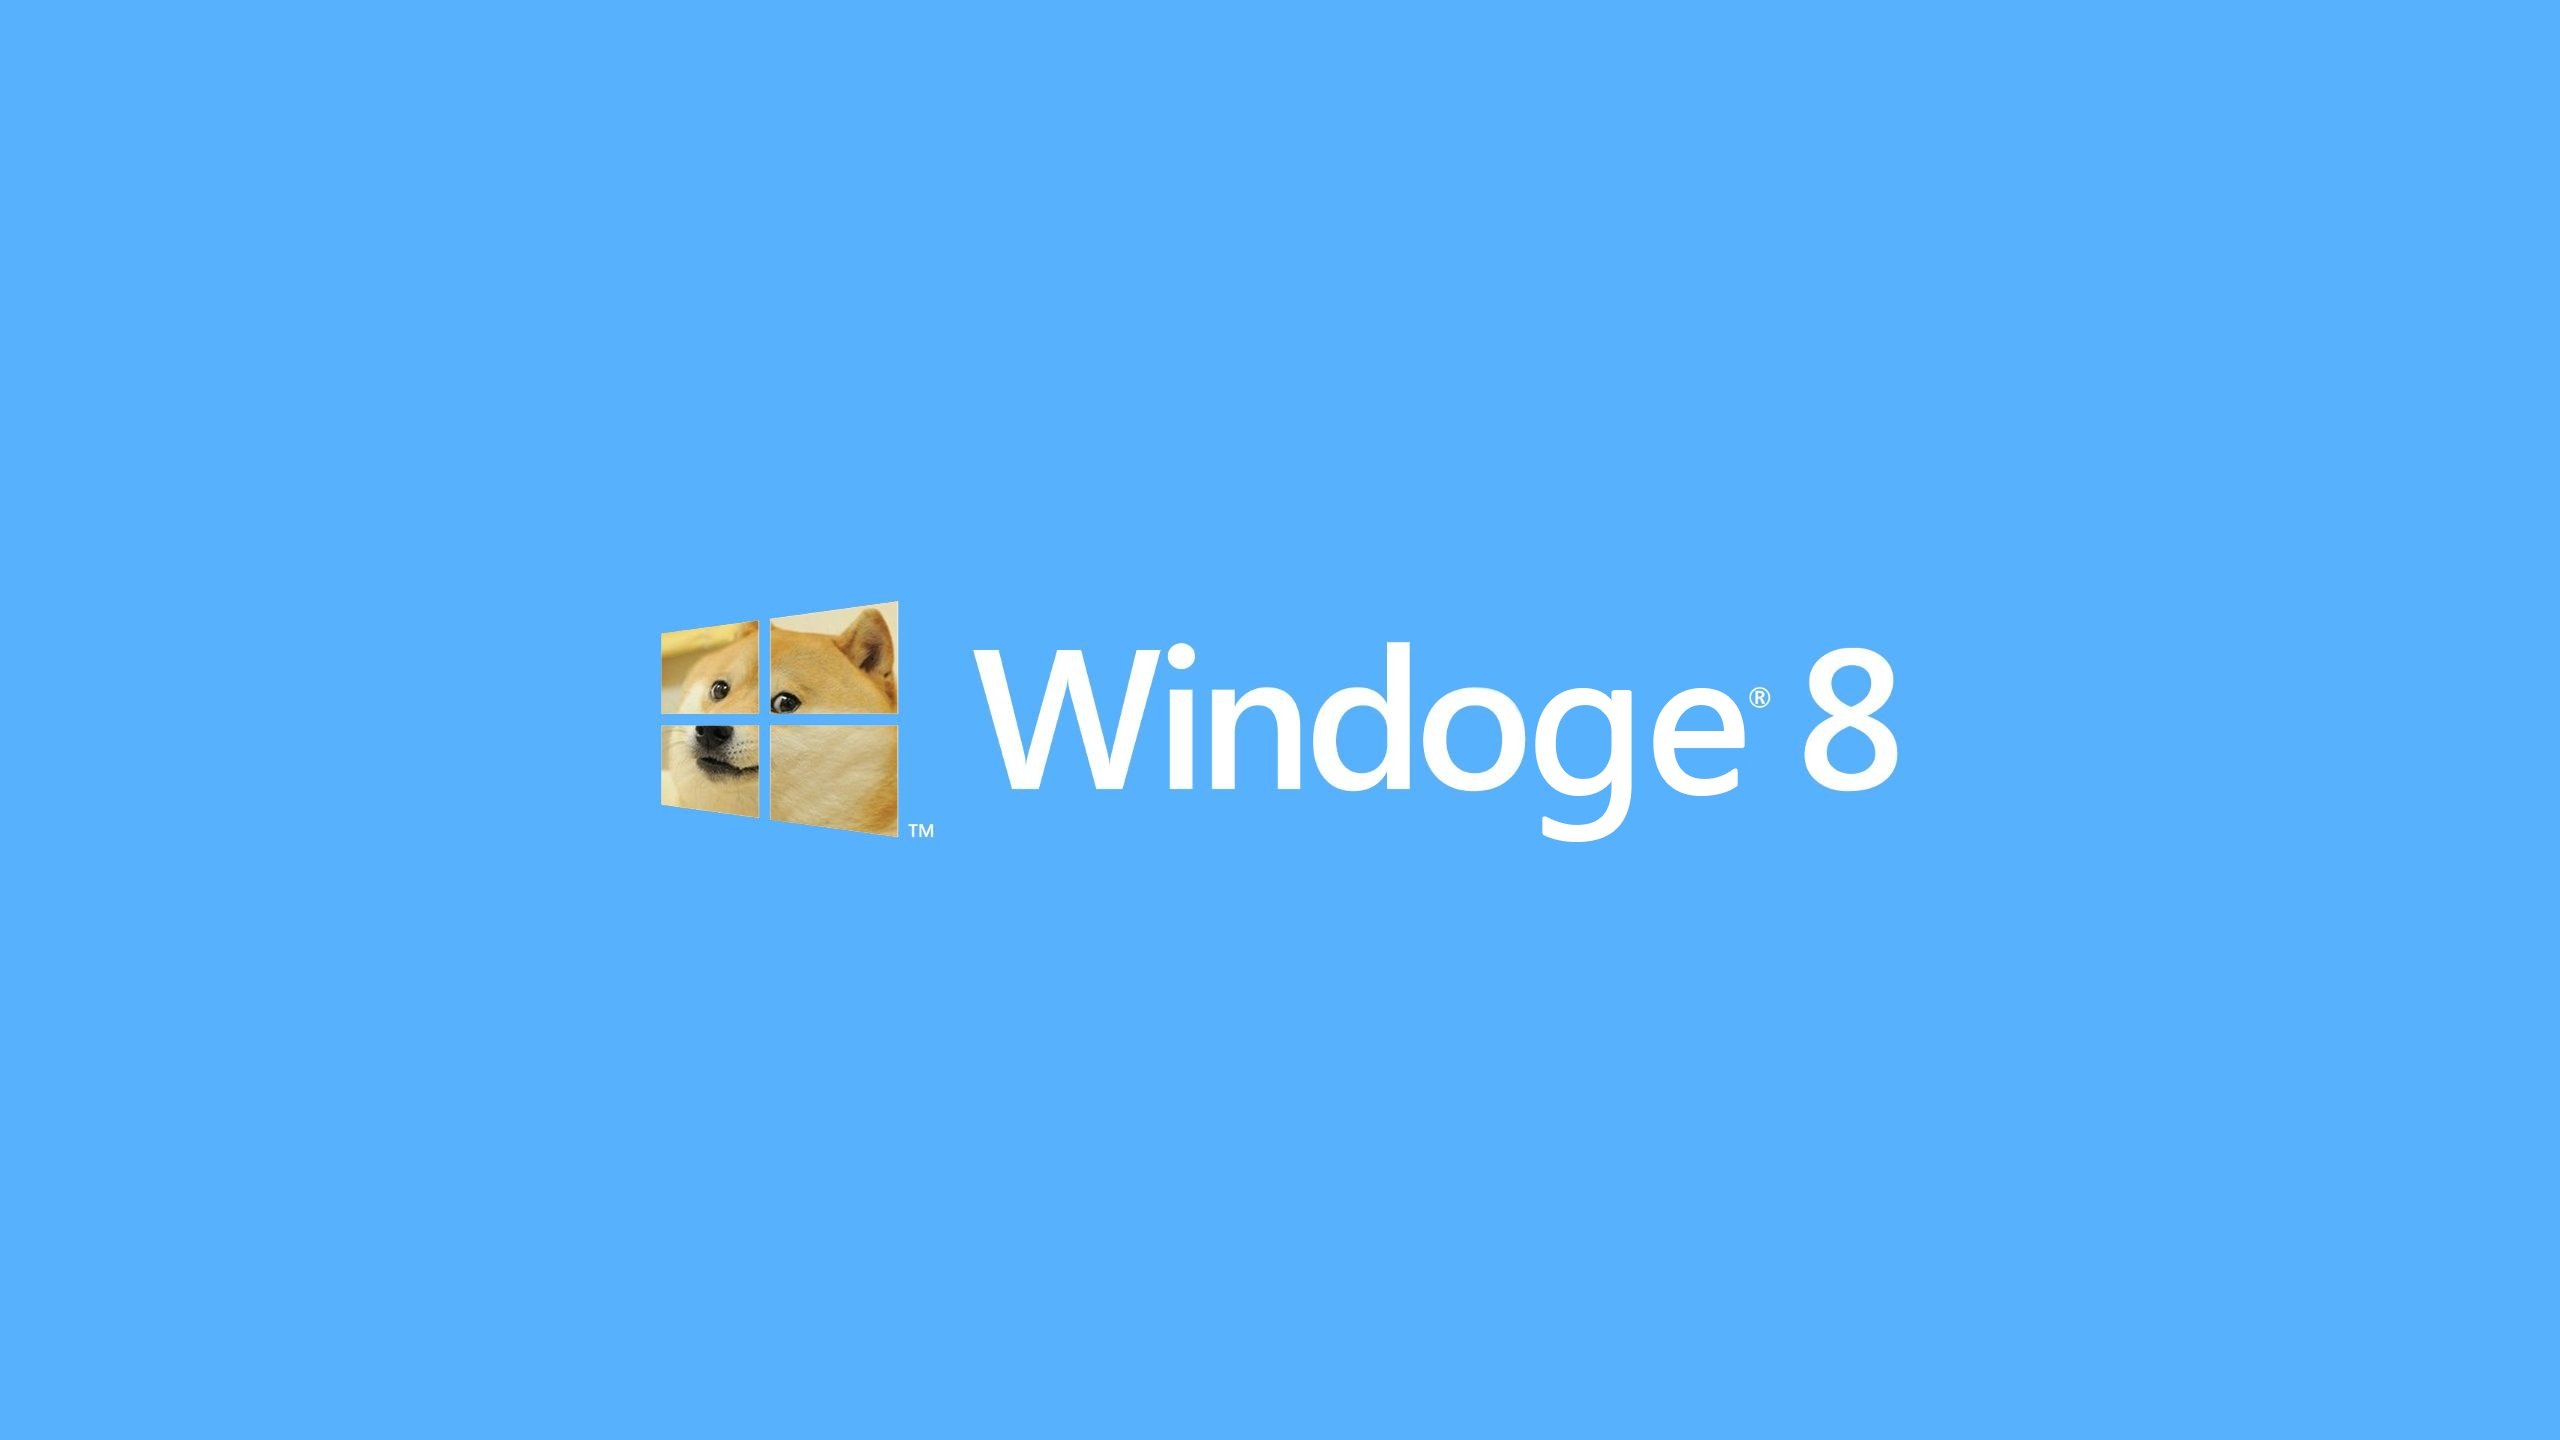 Windoge Doge Wallpaper 2560x1440